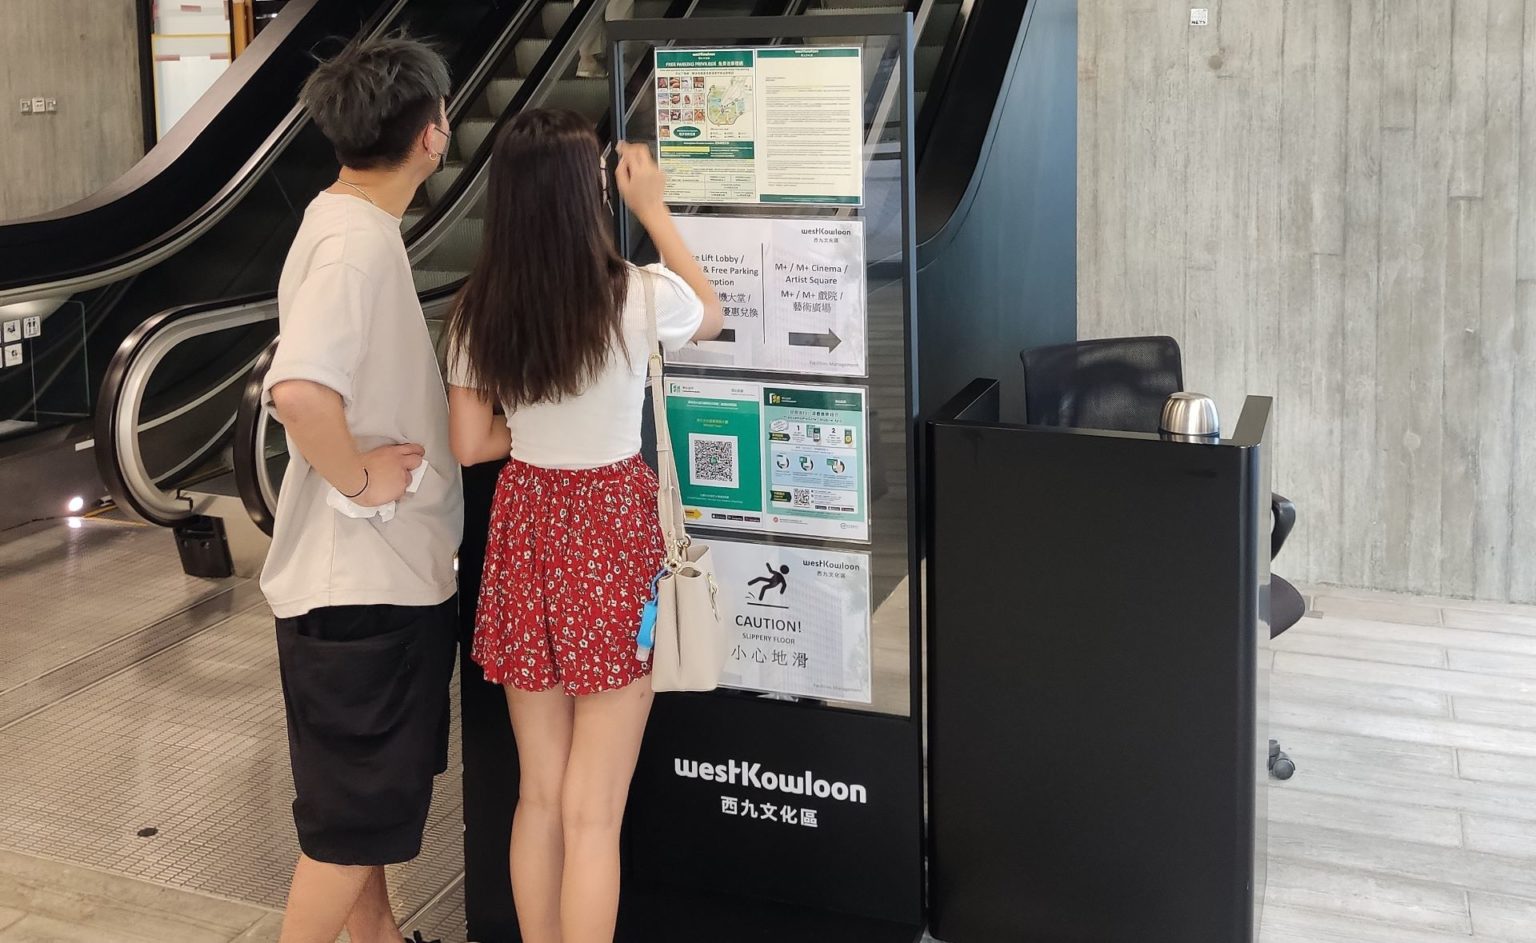 People scanning the LeaveHomeSafe app in Hong Kong